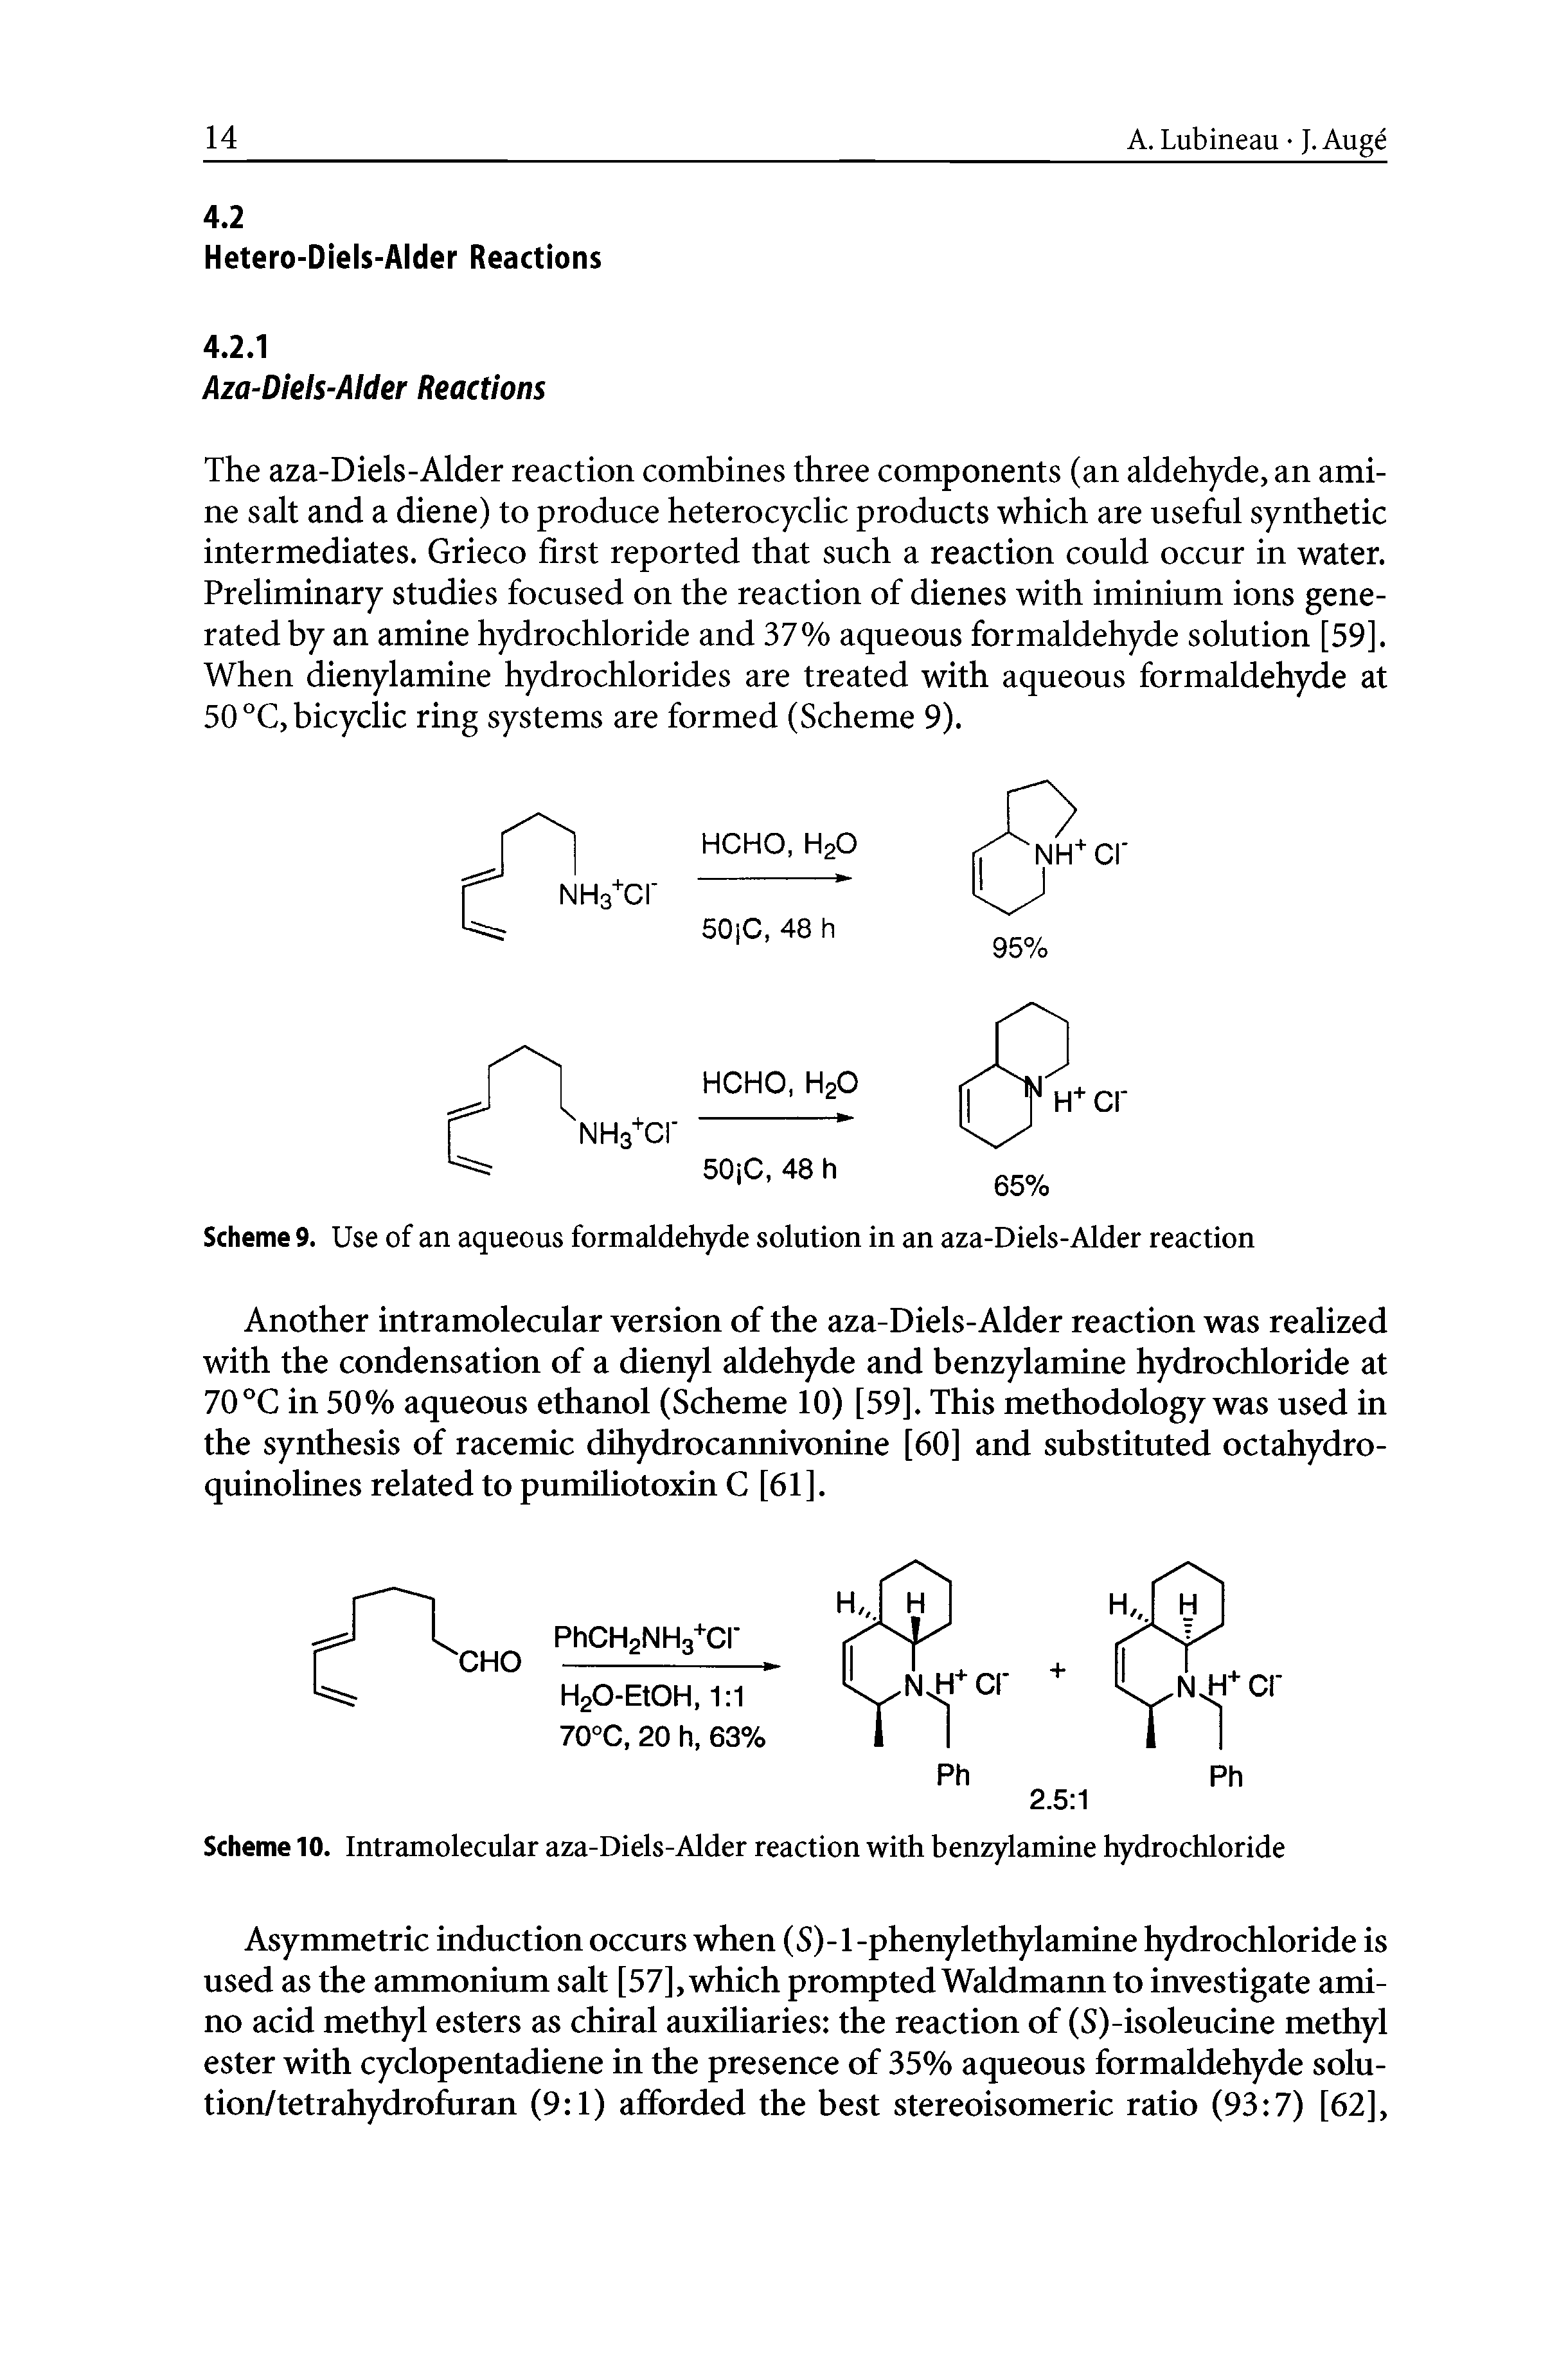 Scheme 9. Use of an aqueous formaldehyde solution in an aza-Diels-Alder reaction...